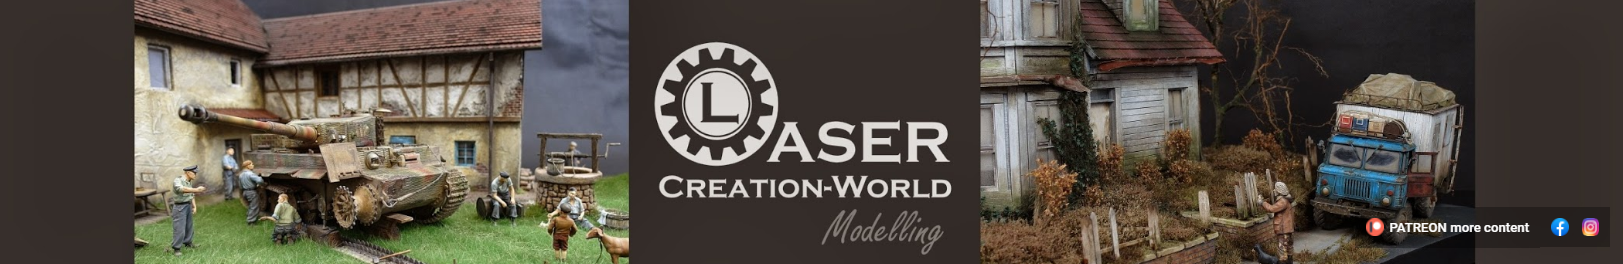  Laser Creation-World模型製作